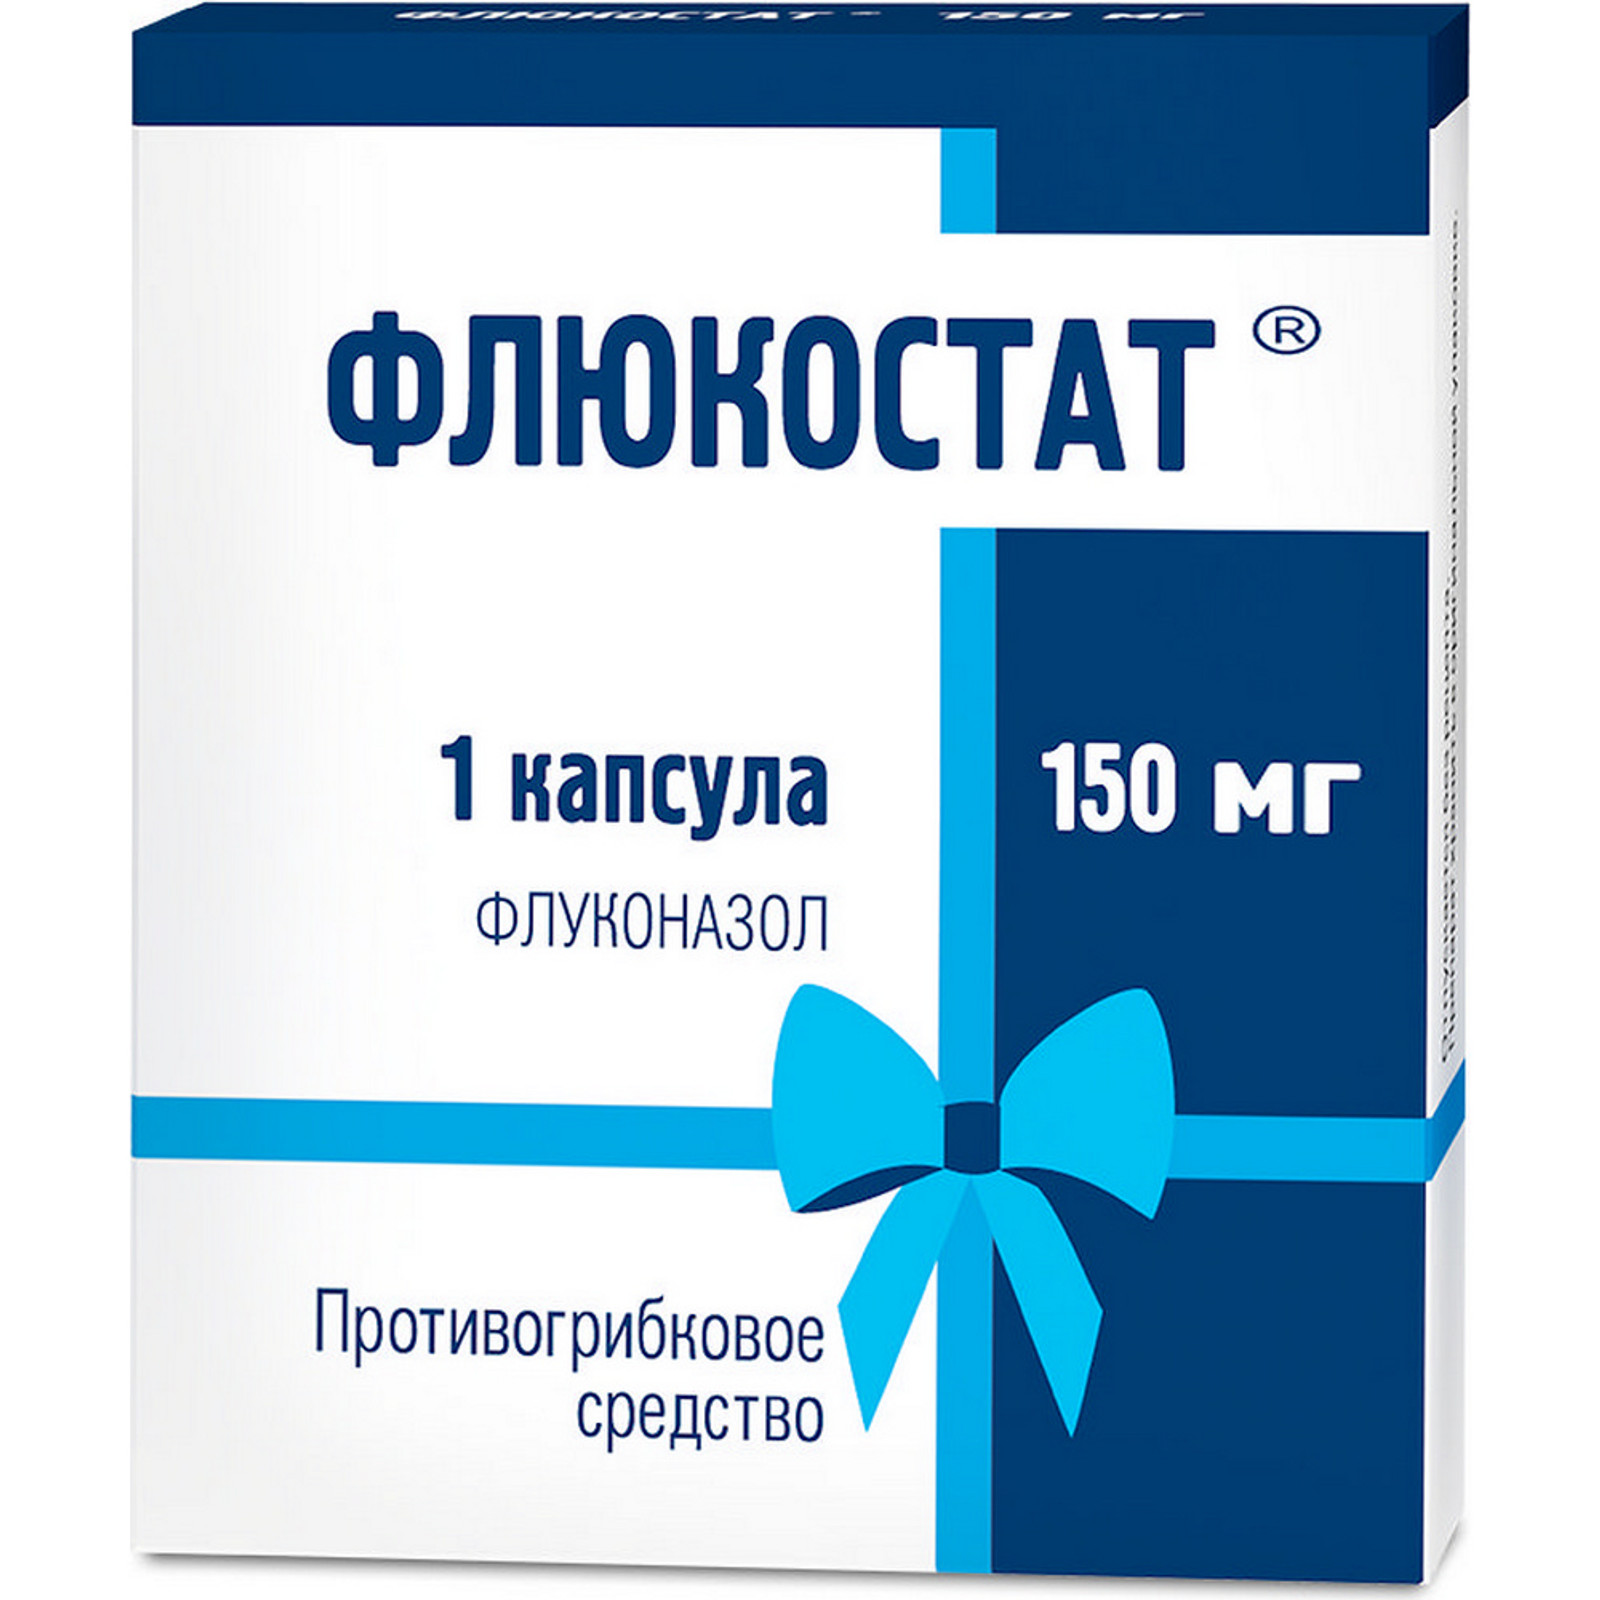 Флюкостат, капсула 150 мг, 1 шт.